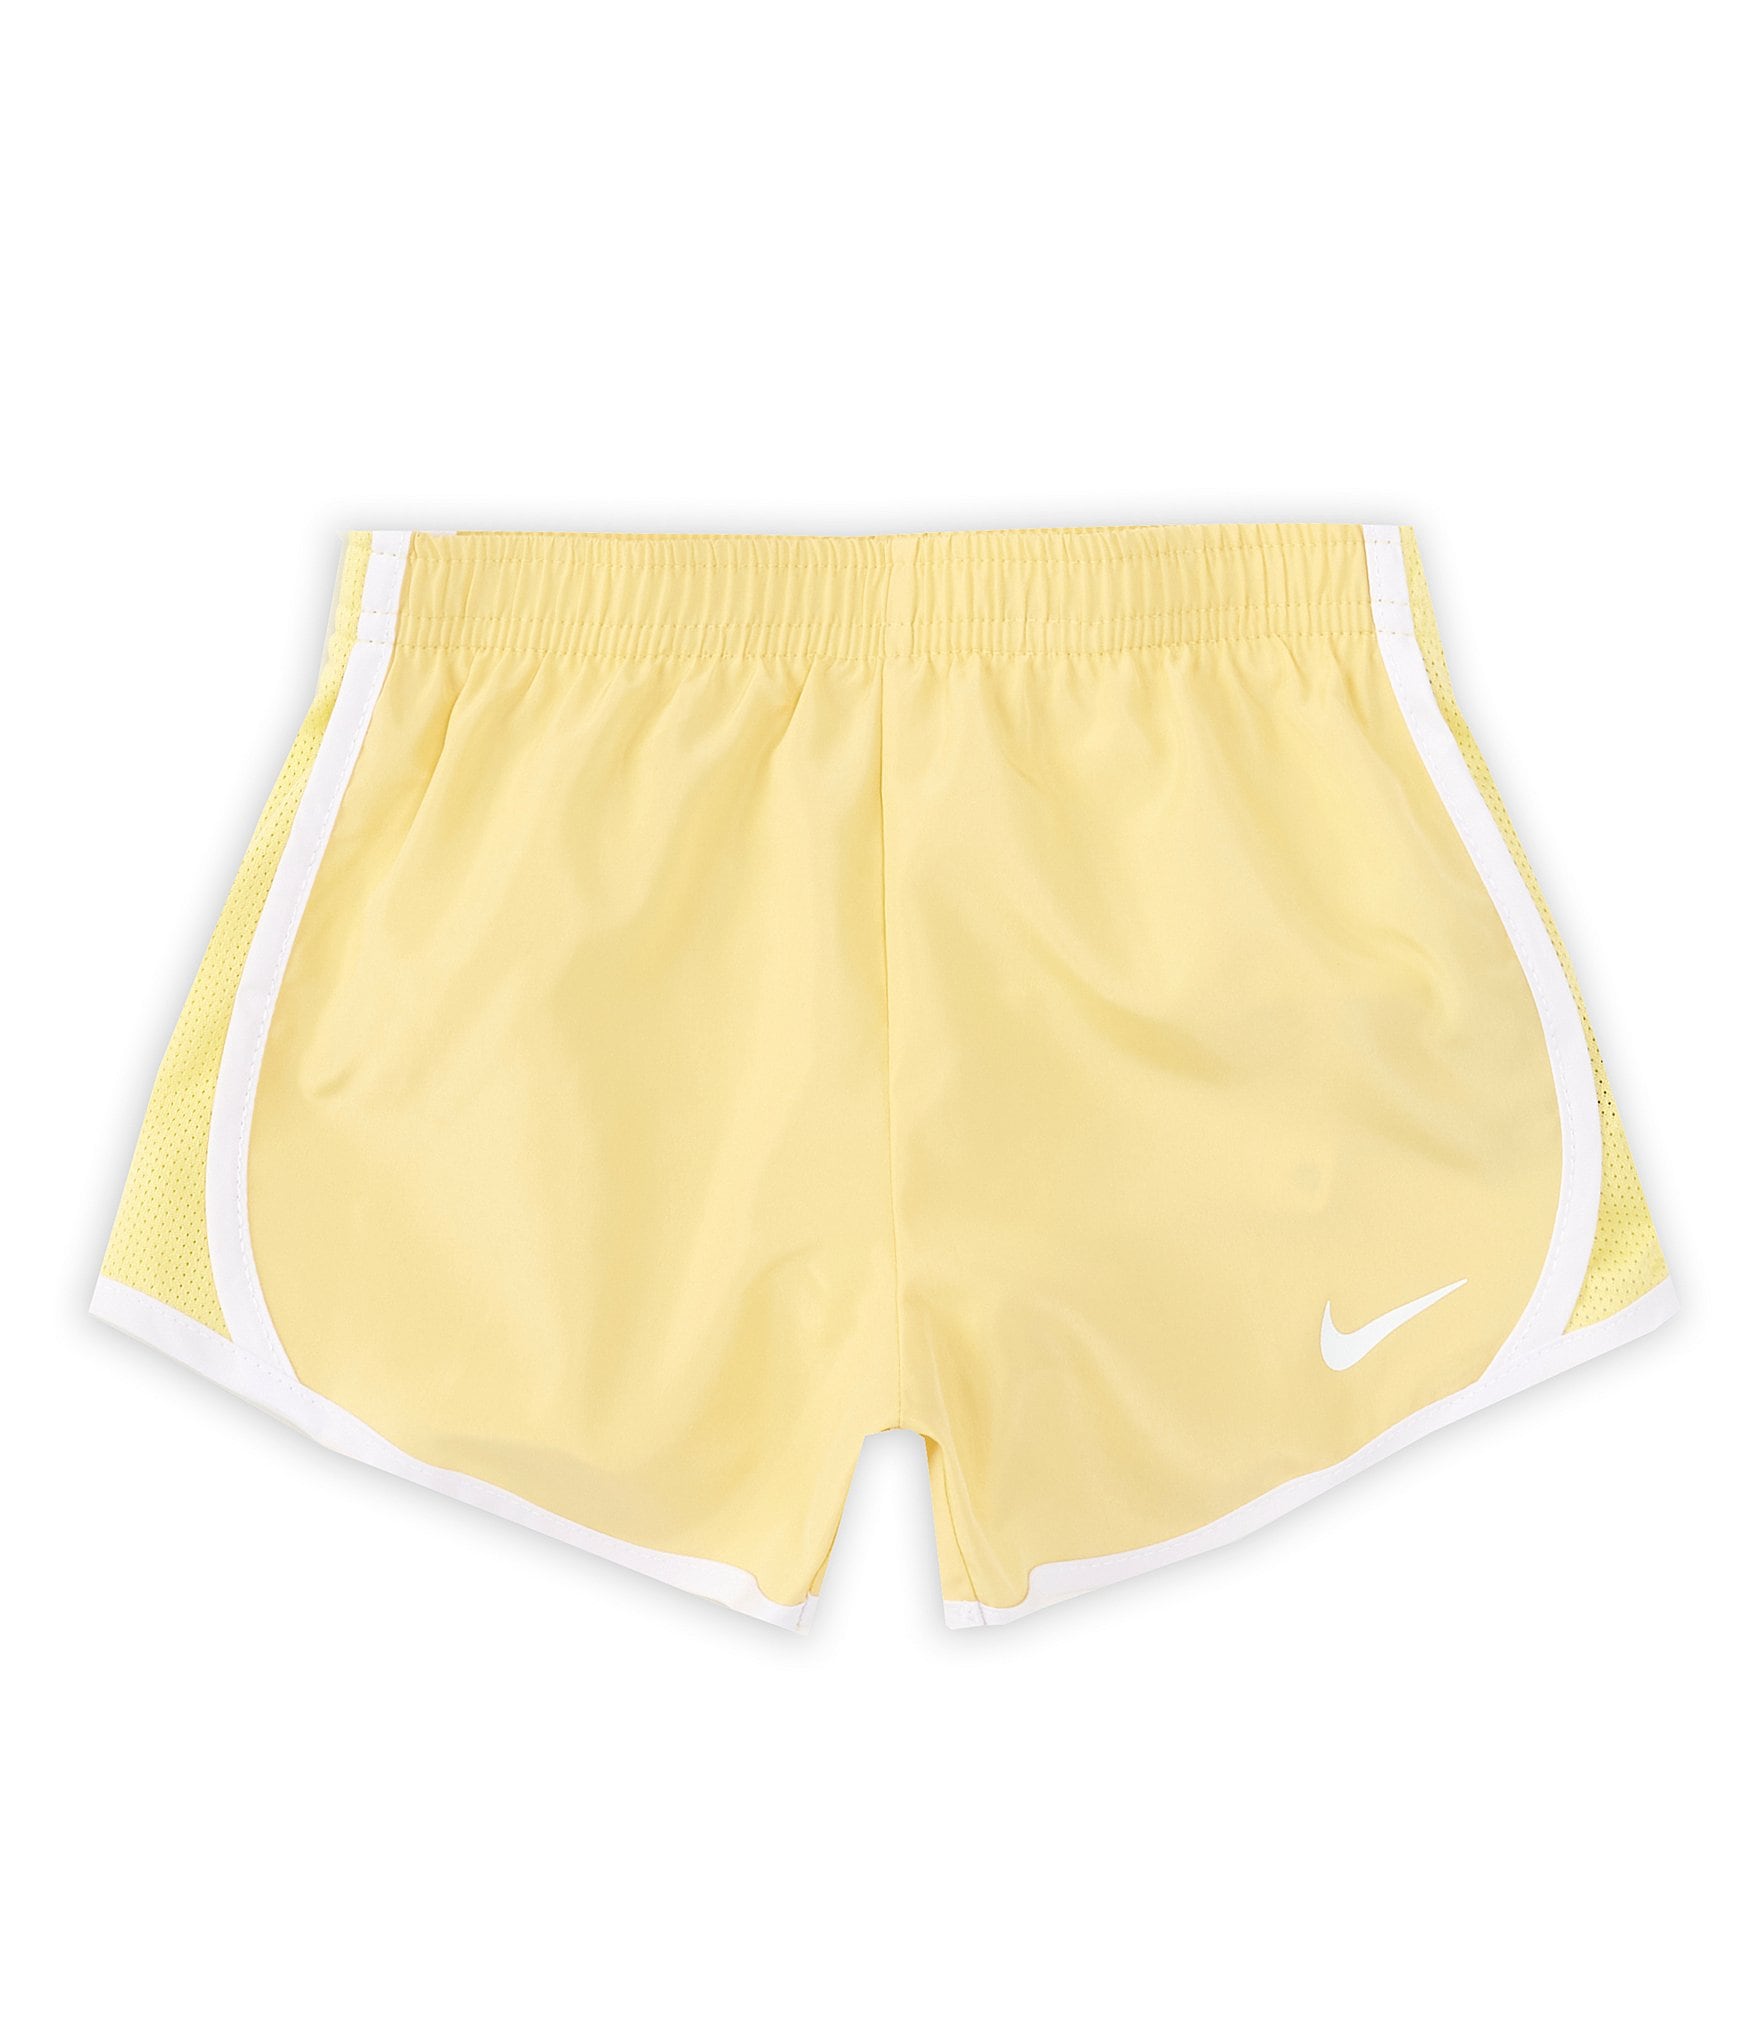 Girls' Nike Dri-Fit Tempo Running Shorts. Size 6